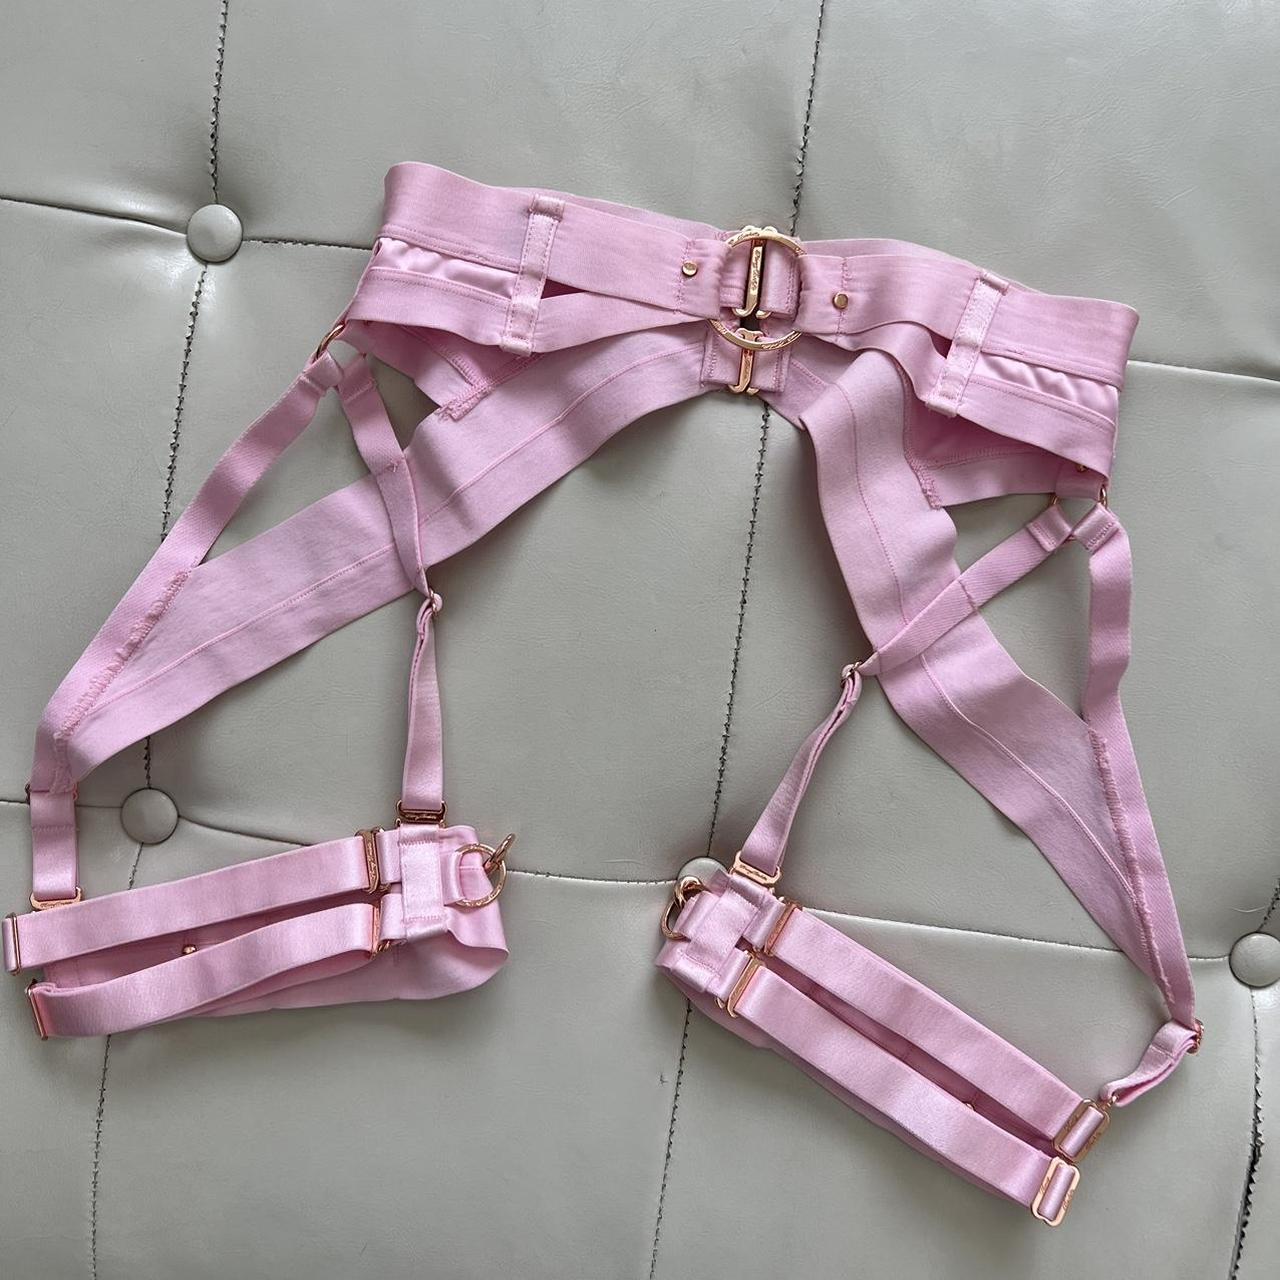 Honey Birdette Women's Pink Underwear (3)